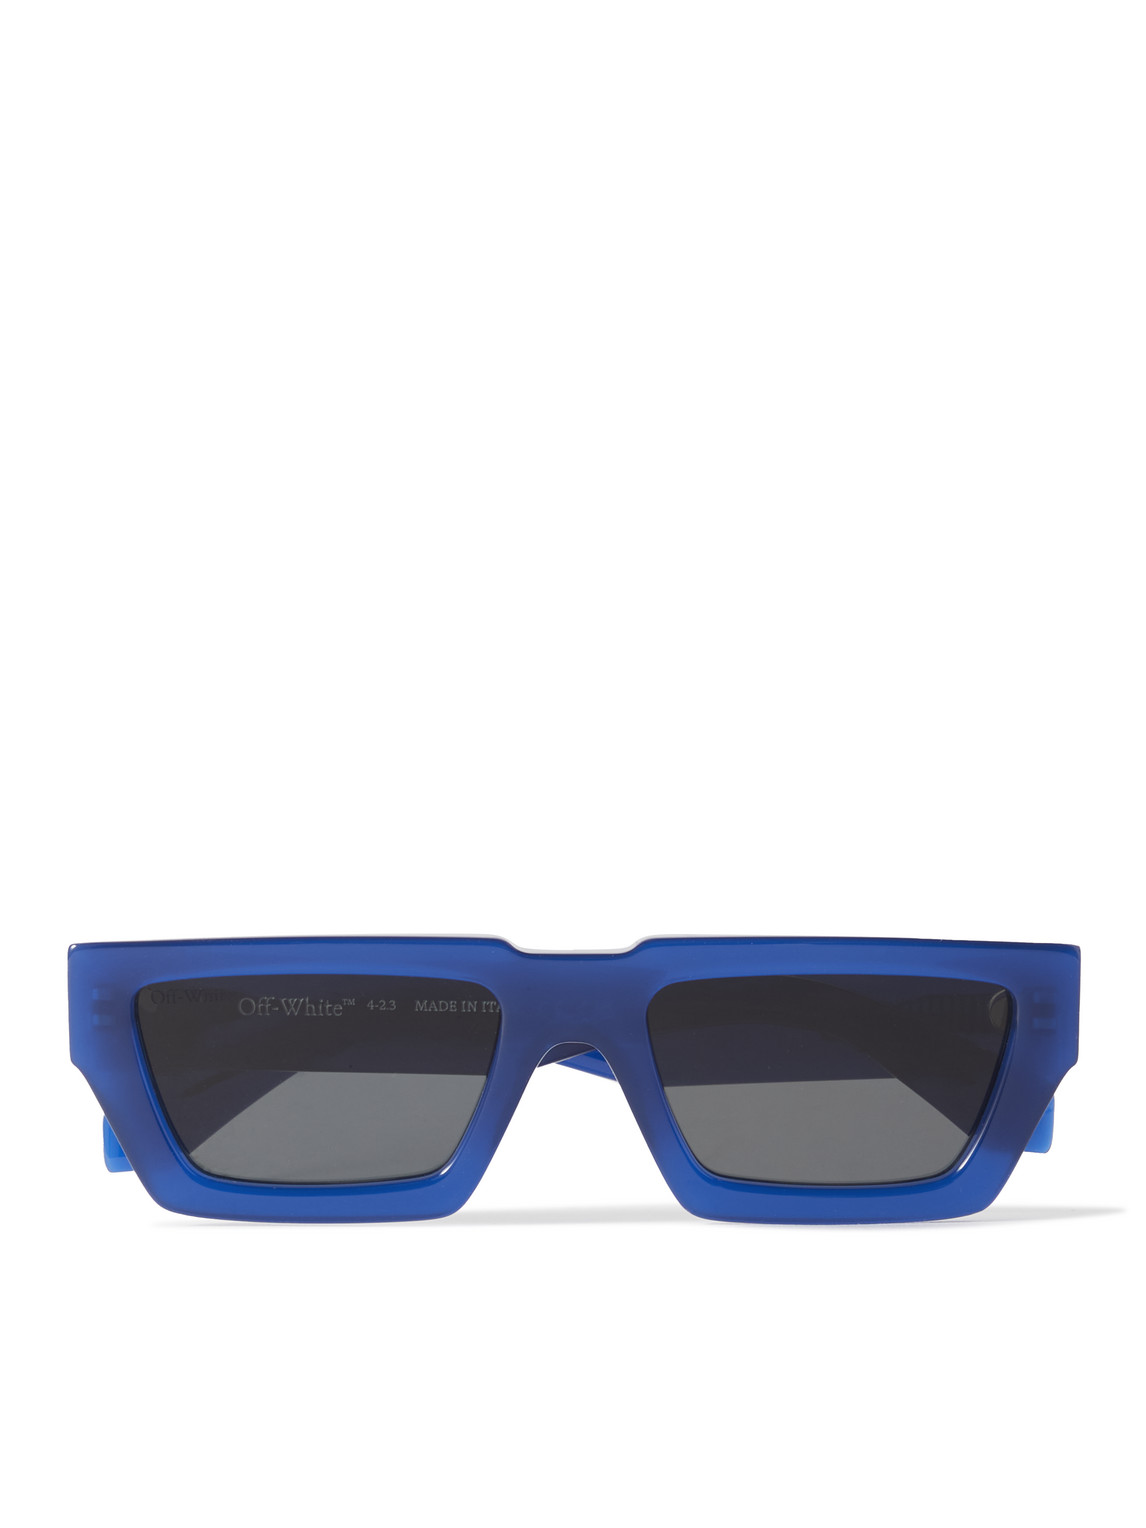 Off-White - Manchester Square-Frame Acetate Sunglasses - Men - Blue von Off-White